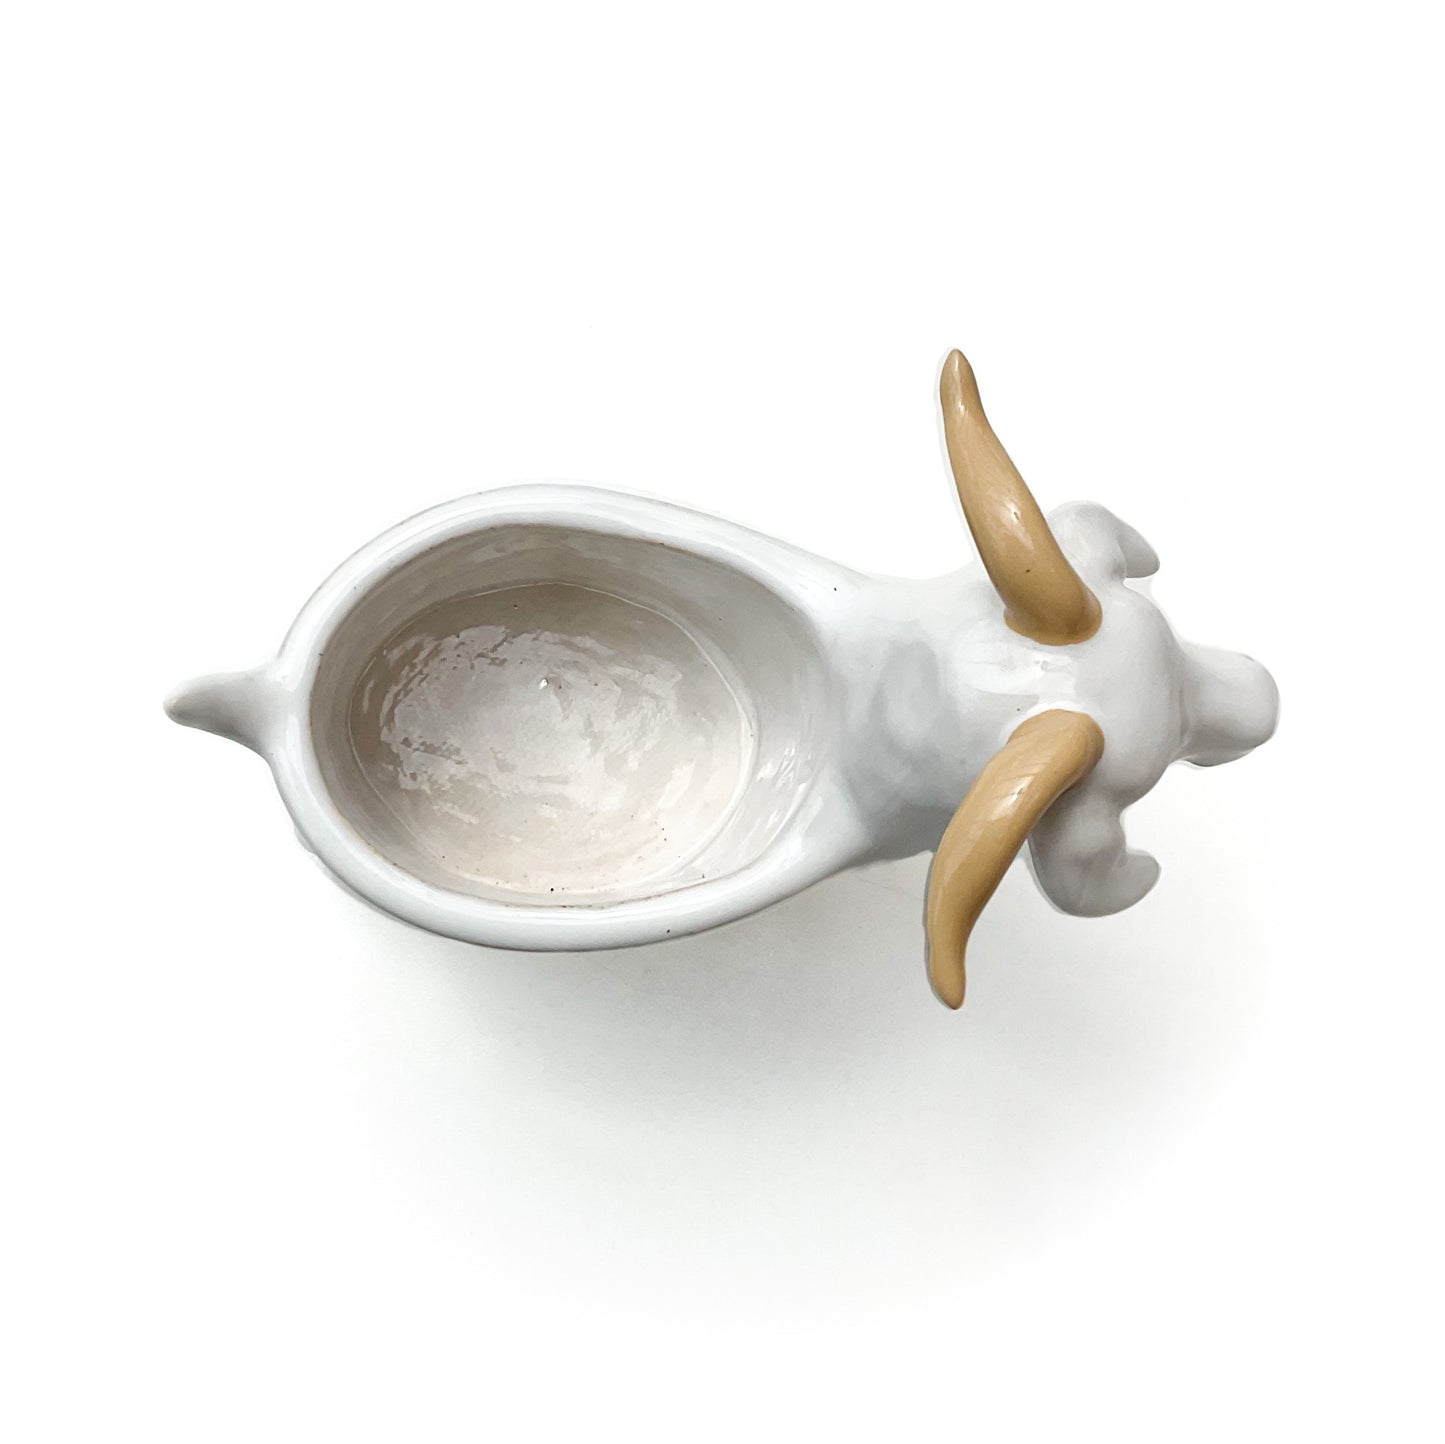 Angora Goat Pot - Ceramic Goat Planter